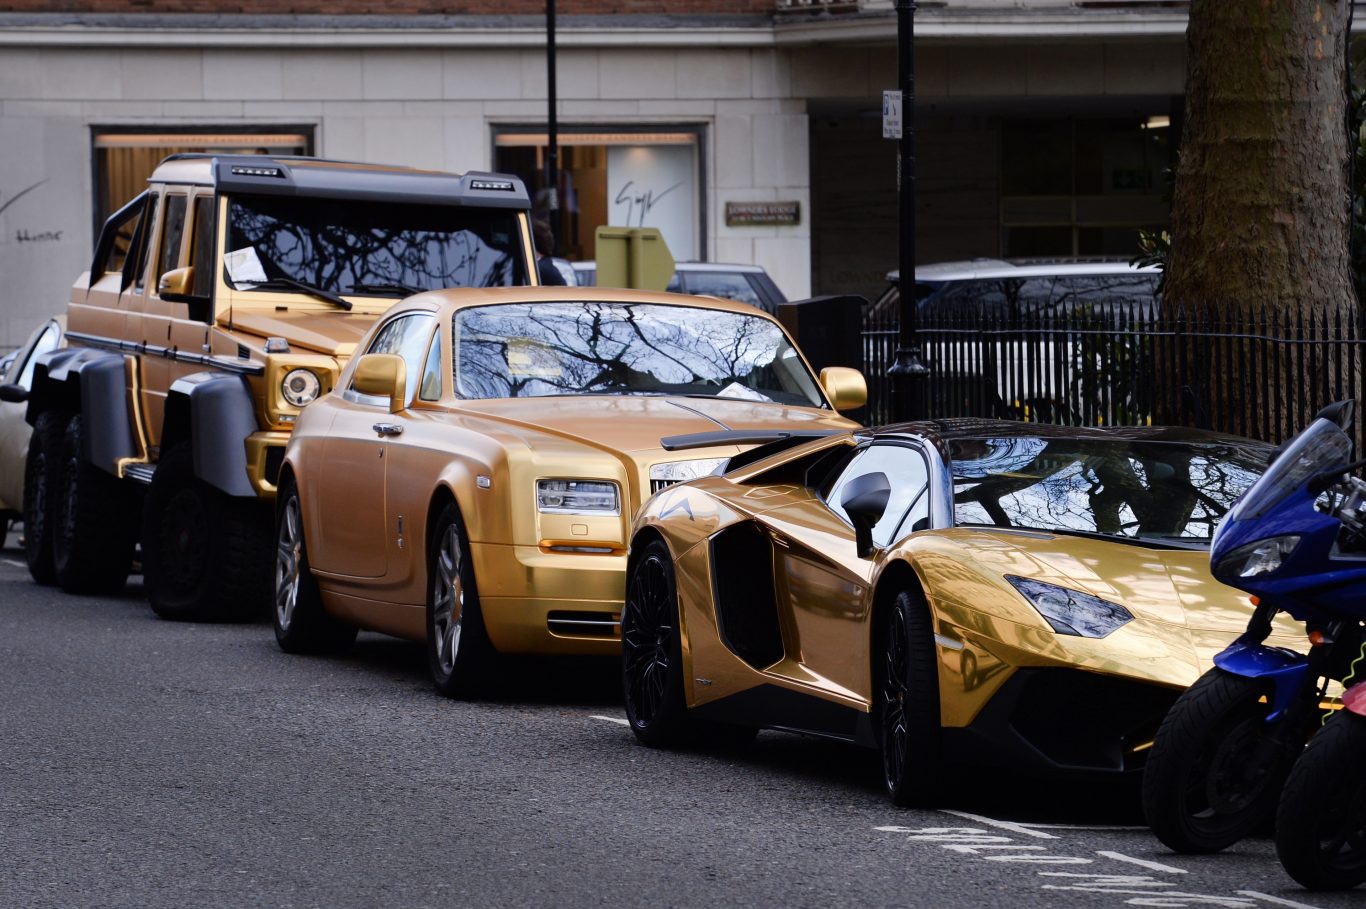 Three gold cars from Saudi Arabia with parking tickets in Knightsbridge (Stefan Rousseau/PA)